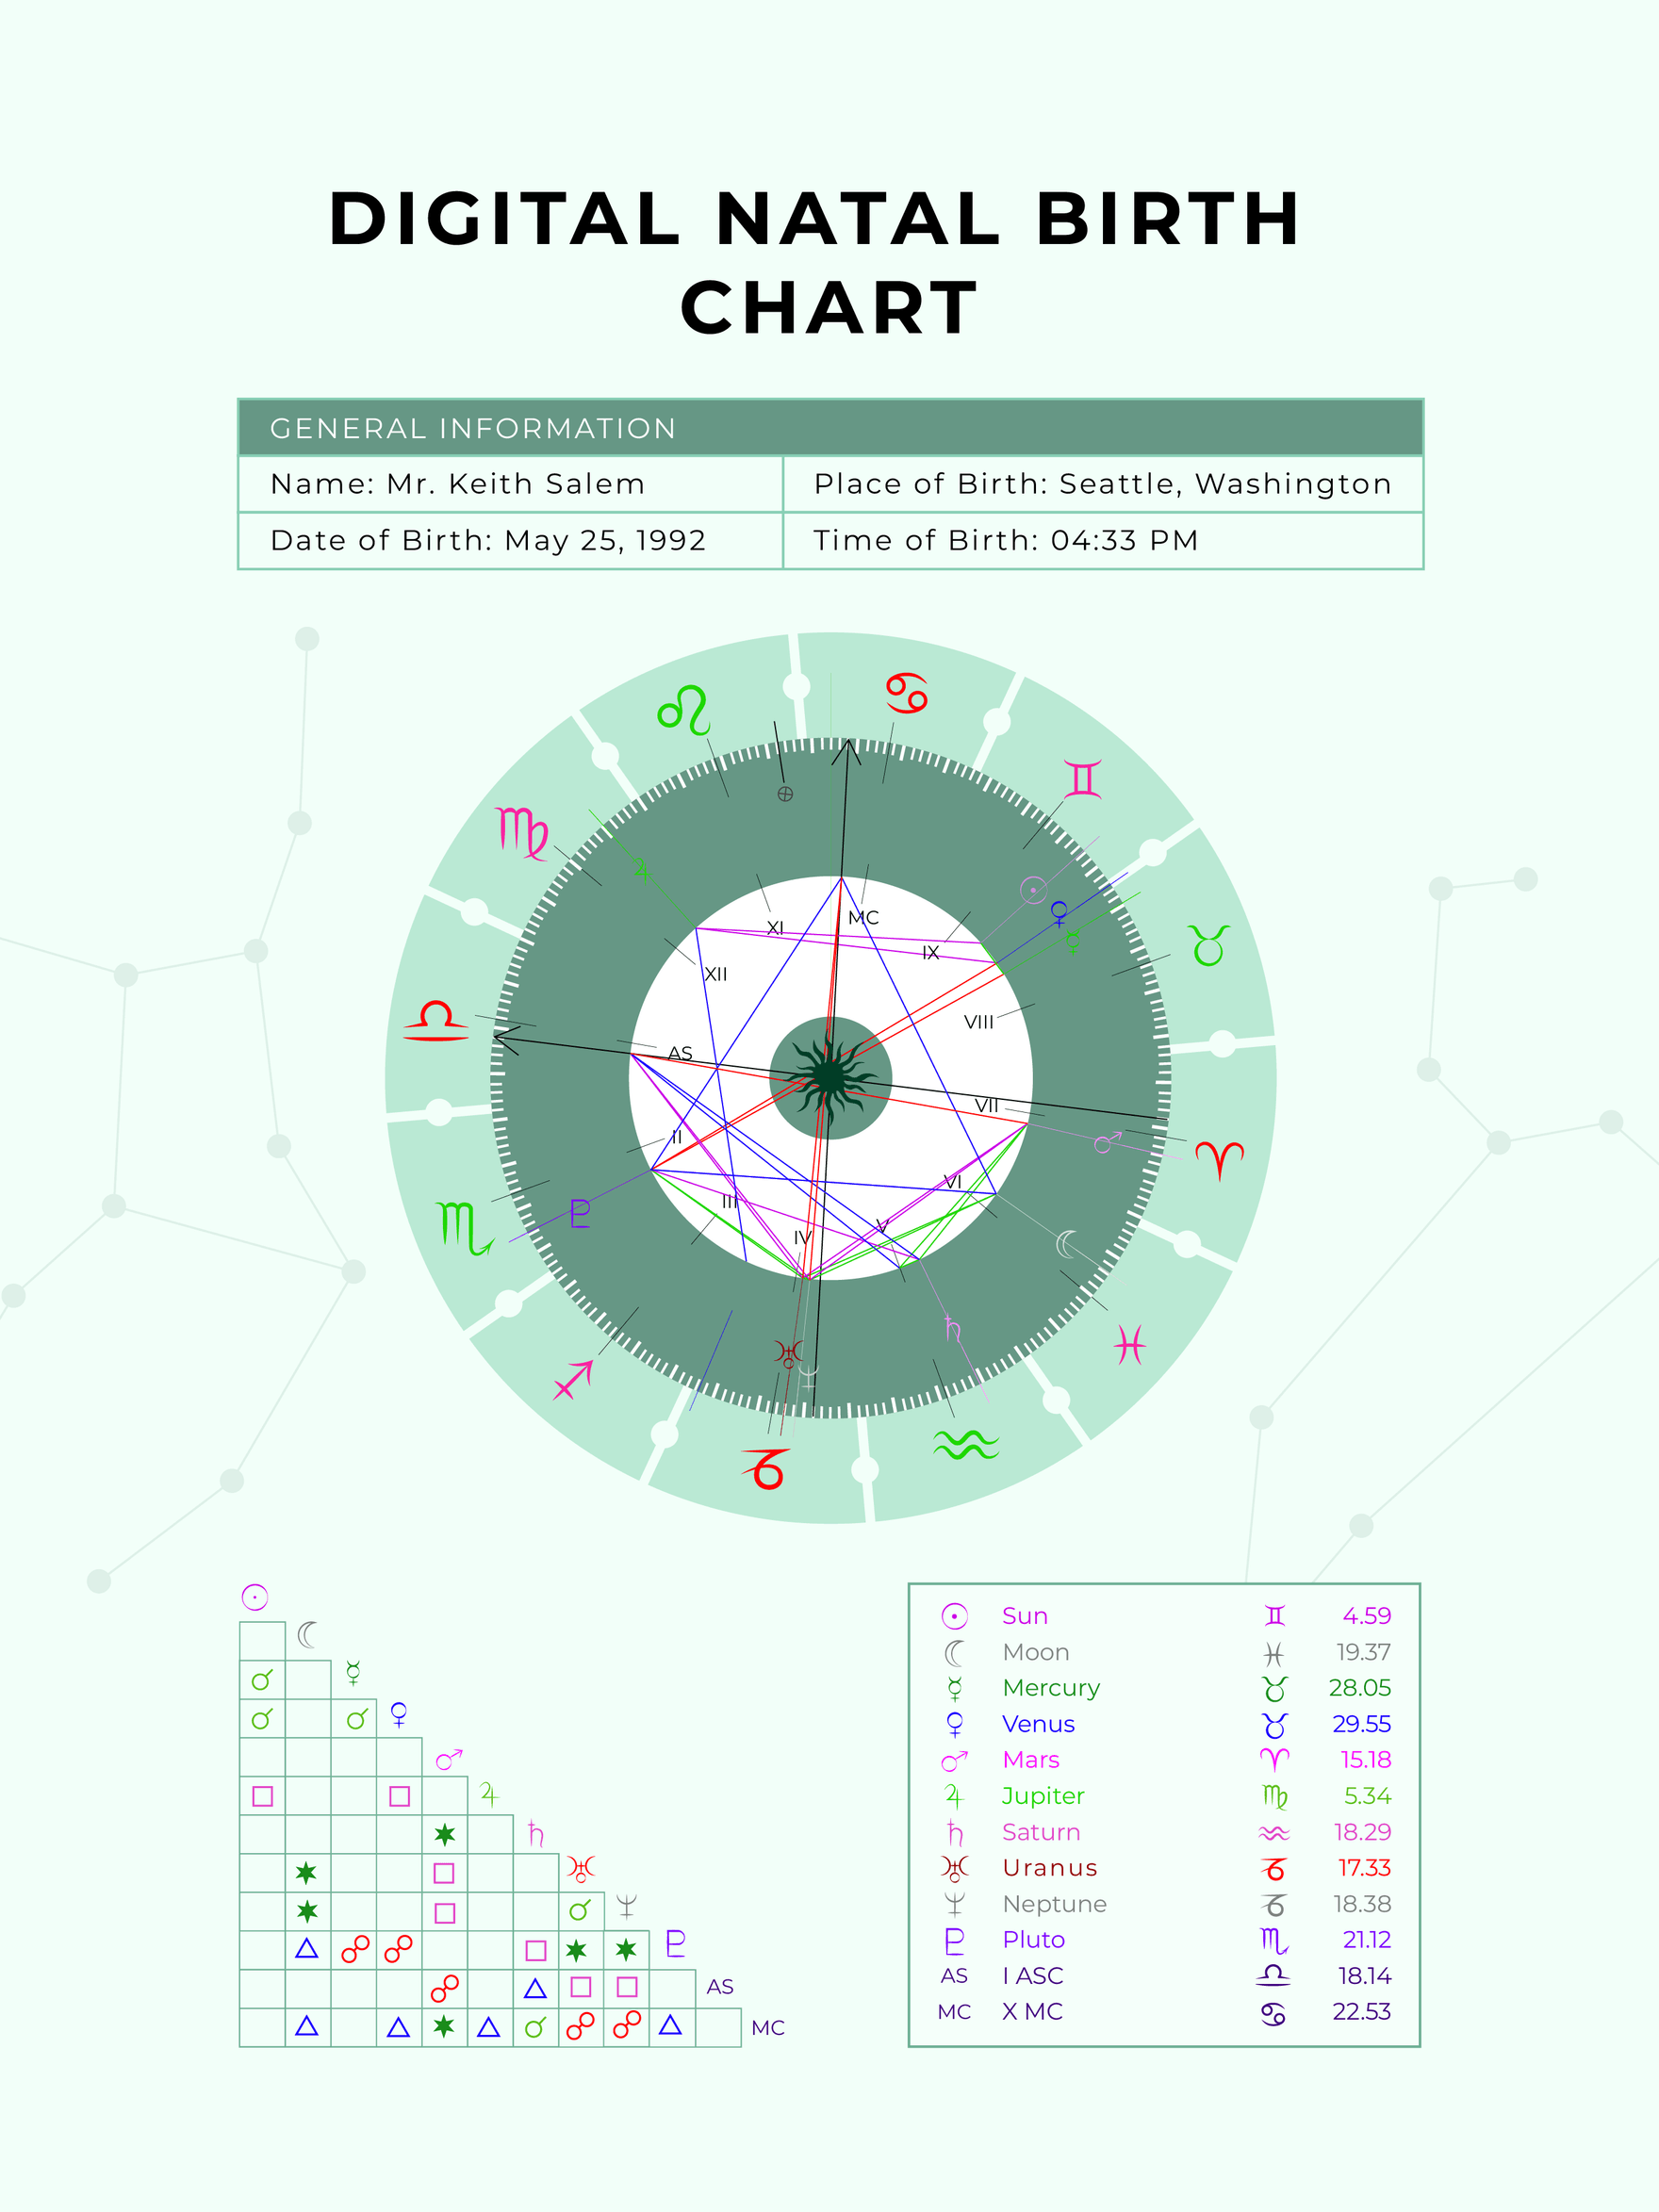 Digital Natal Birth Chart in PDF, Illustrator